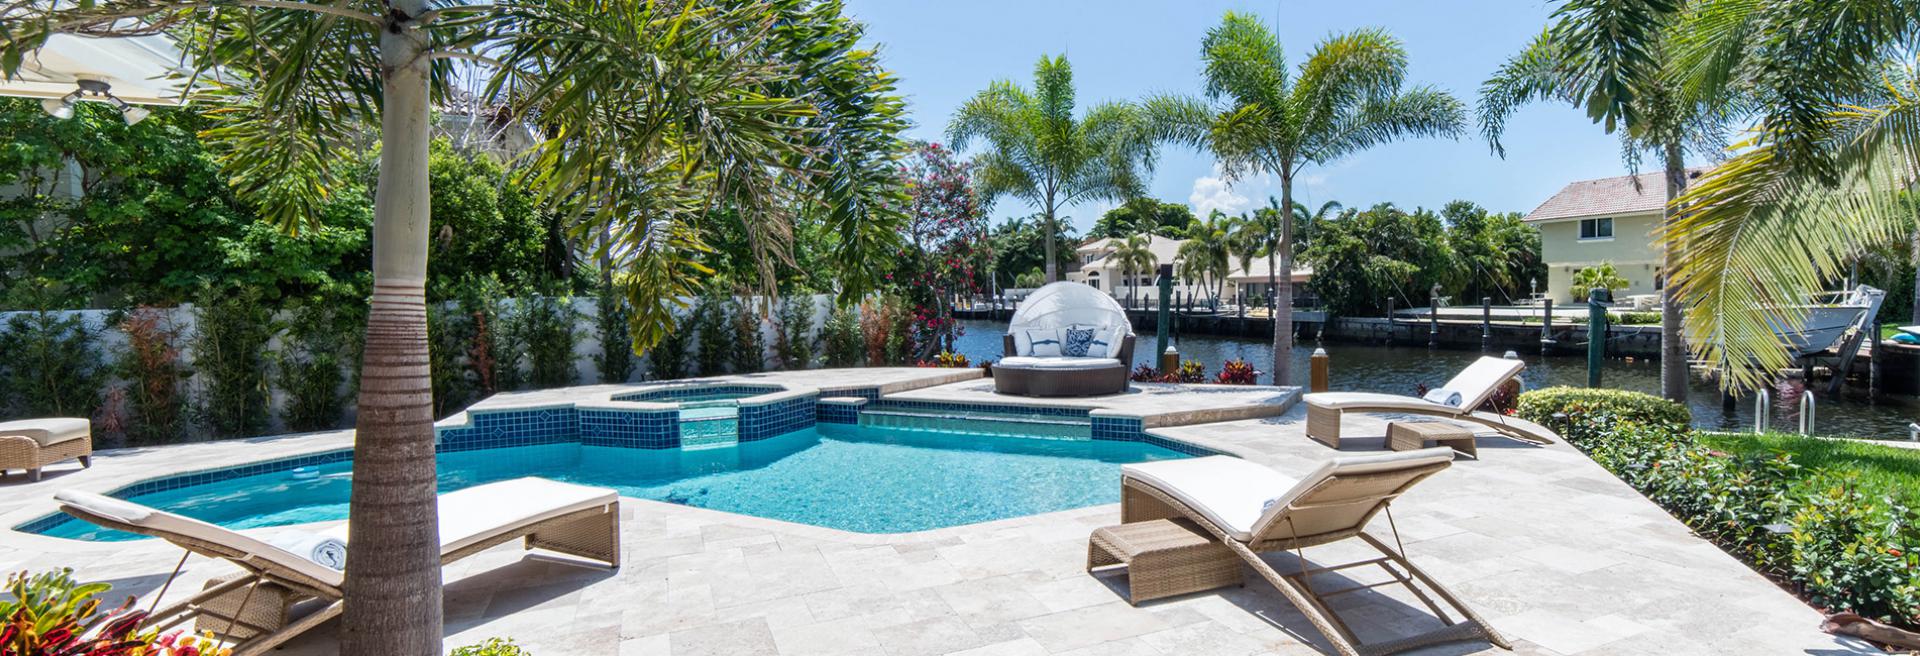 Golden Coast Real Estate - Villa Lara for sale in Delray Florida